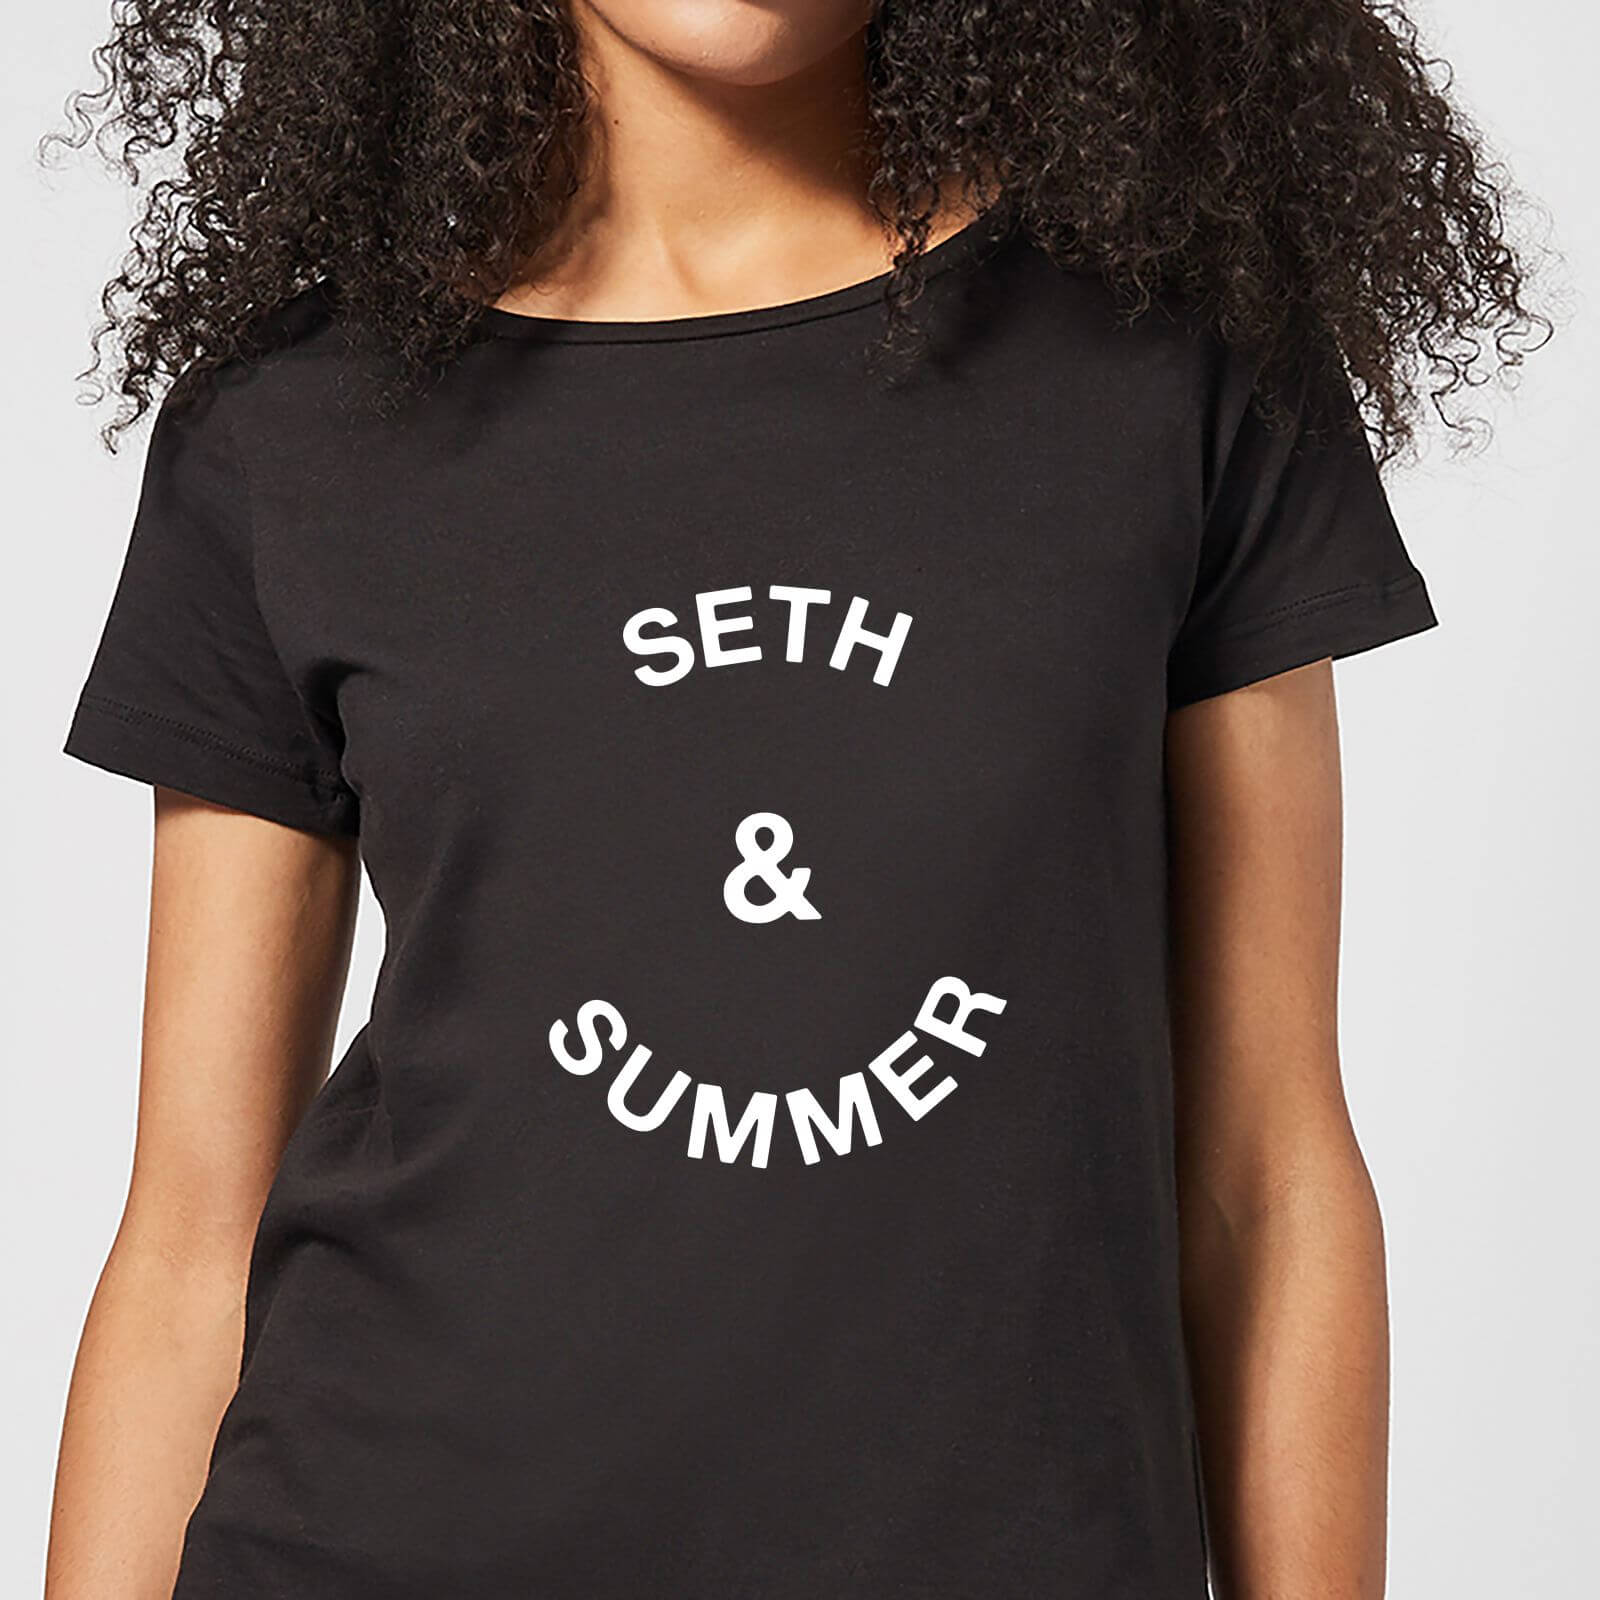 Seth & Summer Women's T-Shirt - Black - XL - Black